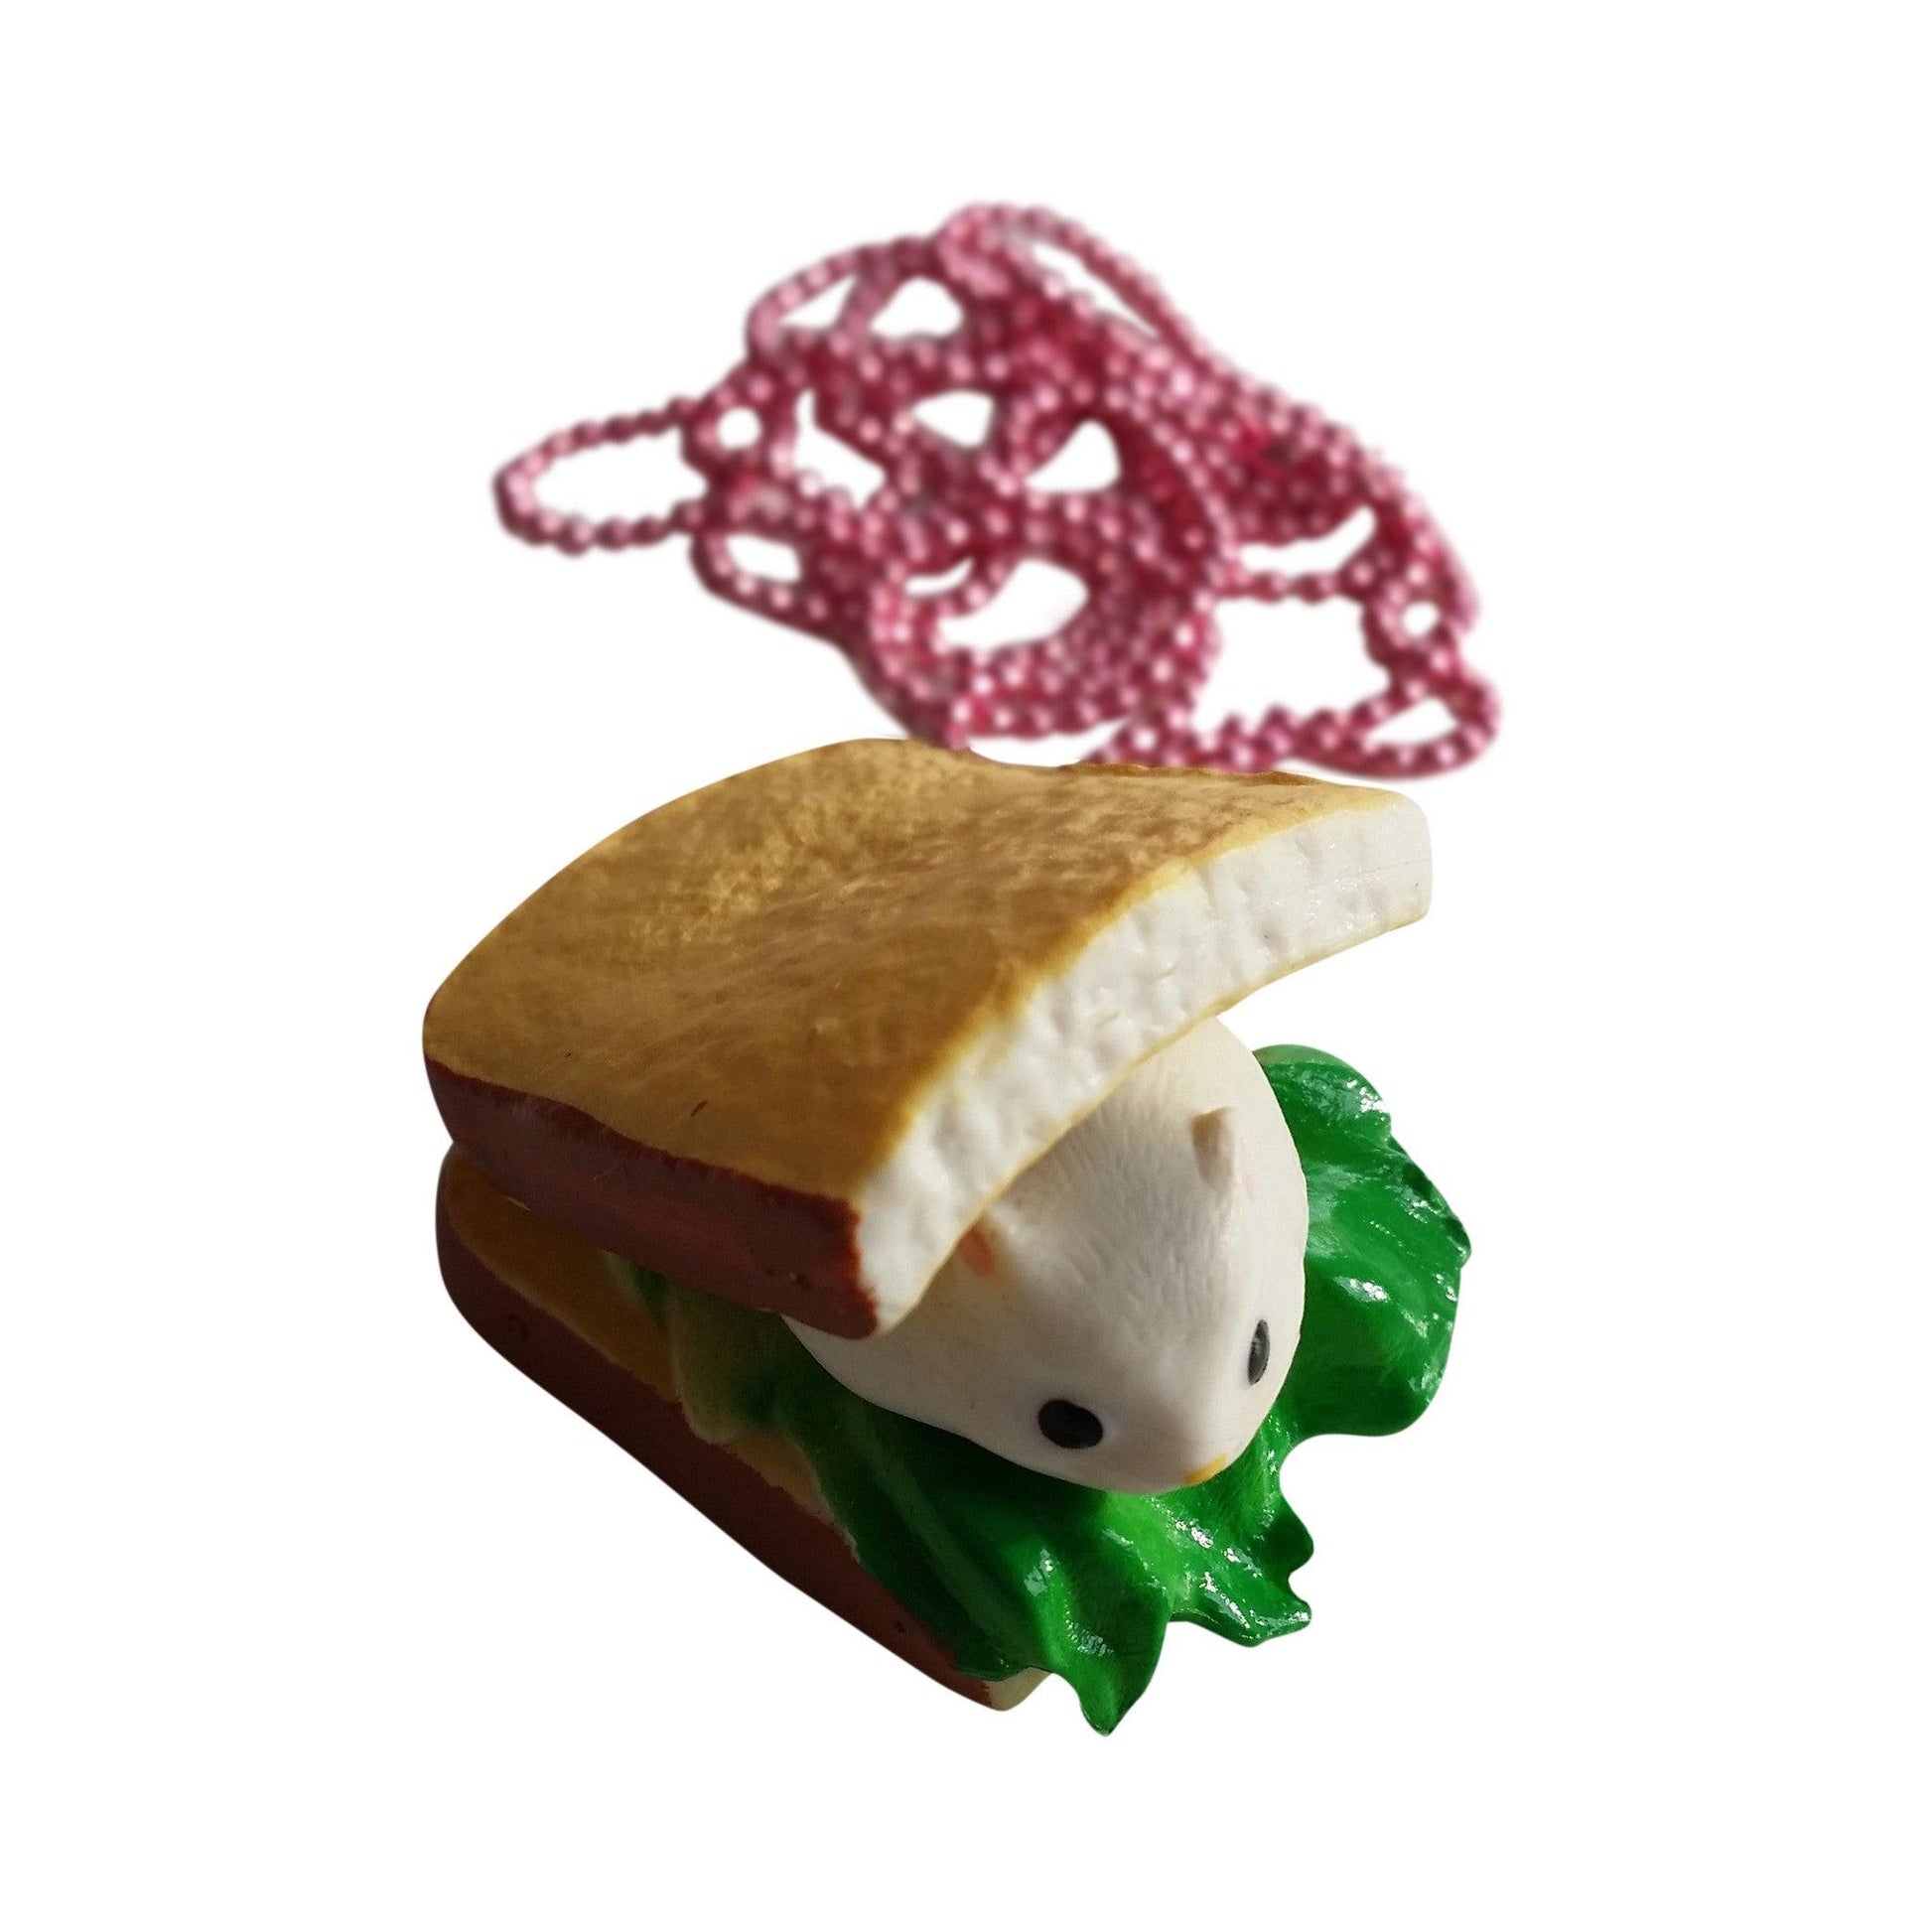 Ltd. Pop Cutie Cafe' Ham Necklaces - POP CUTIE accessories